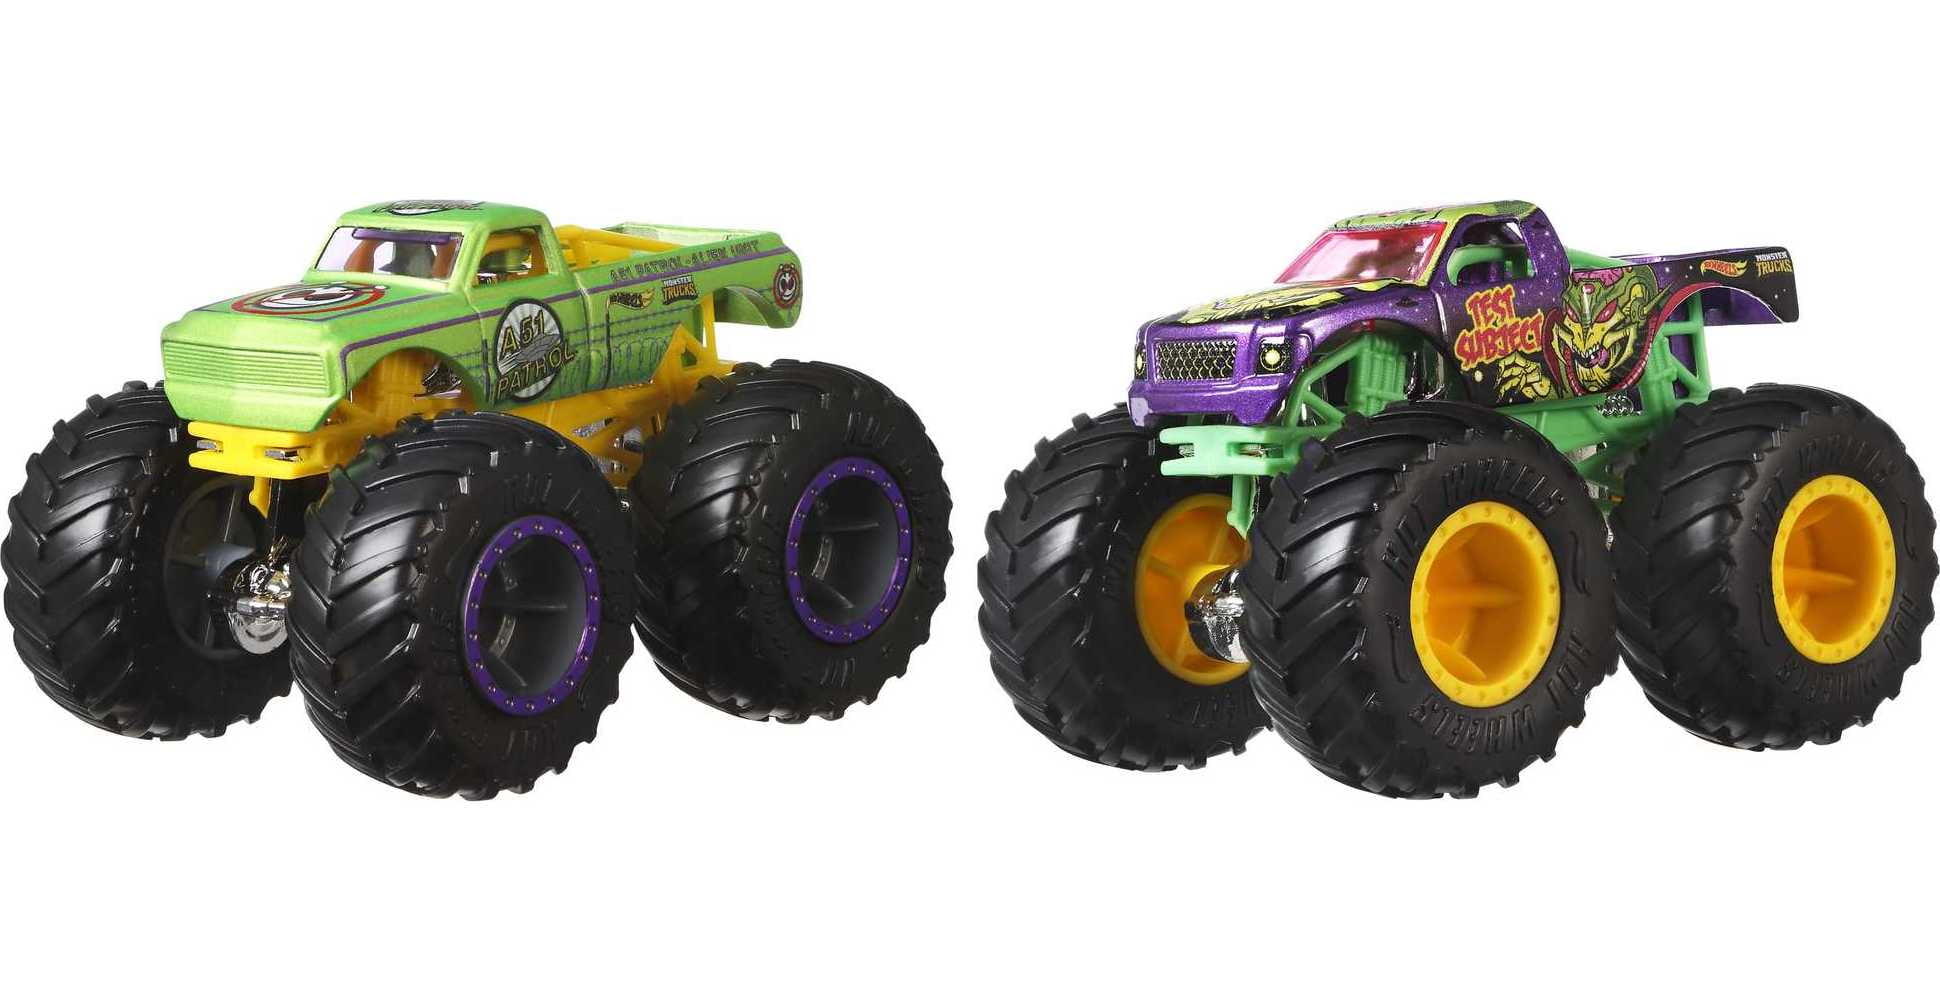 Carrinho Hot Wheels Monster Trucks Mattel Sortido 2 Unidades em